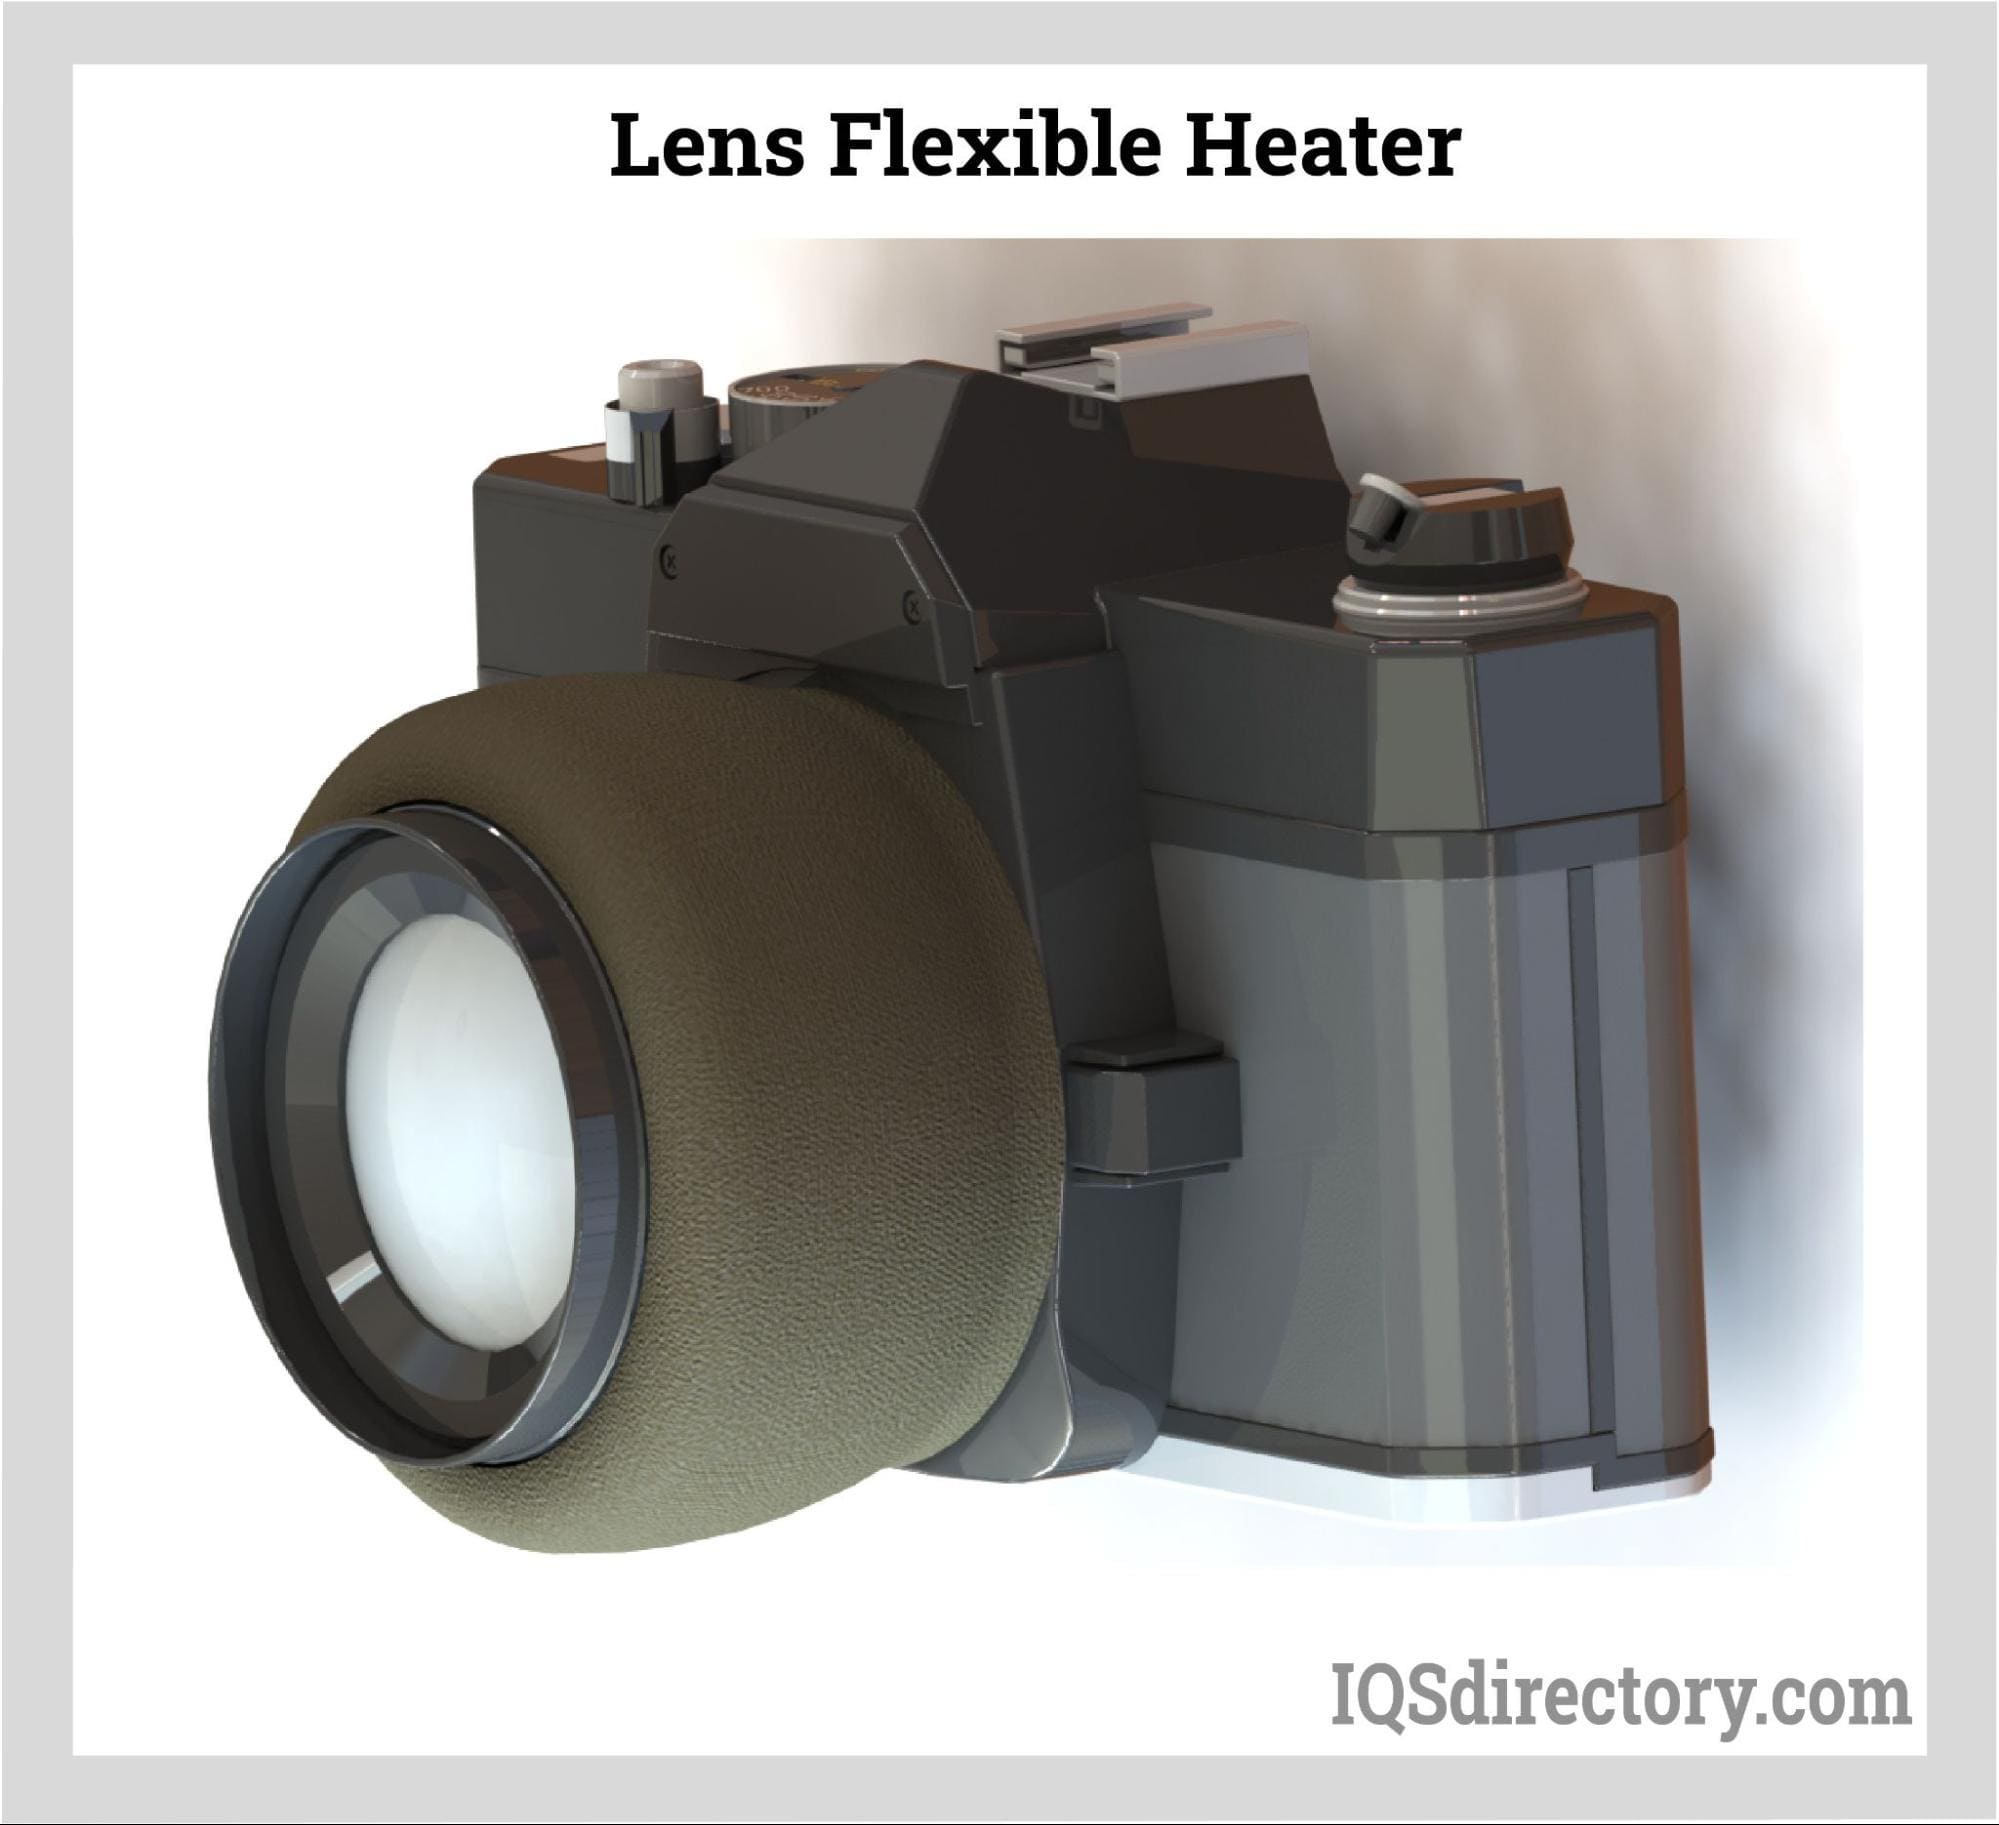 Lens Flexible Heater